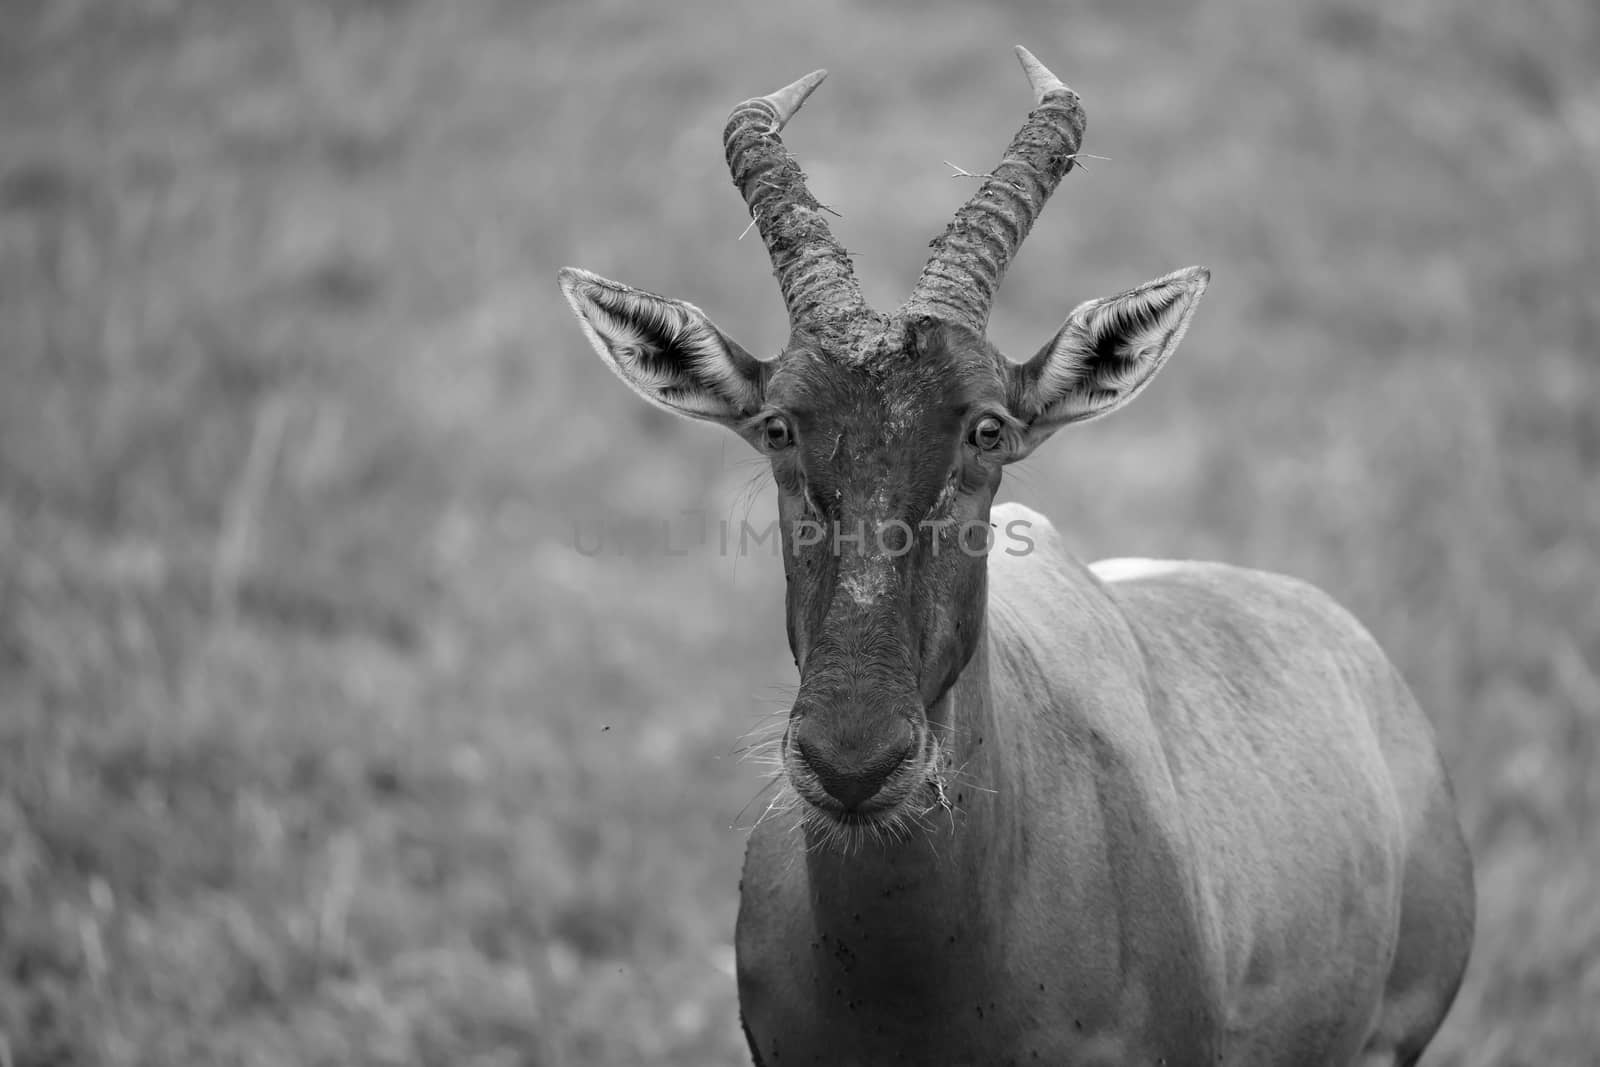 A Topi antelope in the grassland of Kenya's savannah